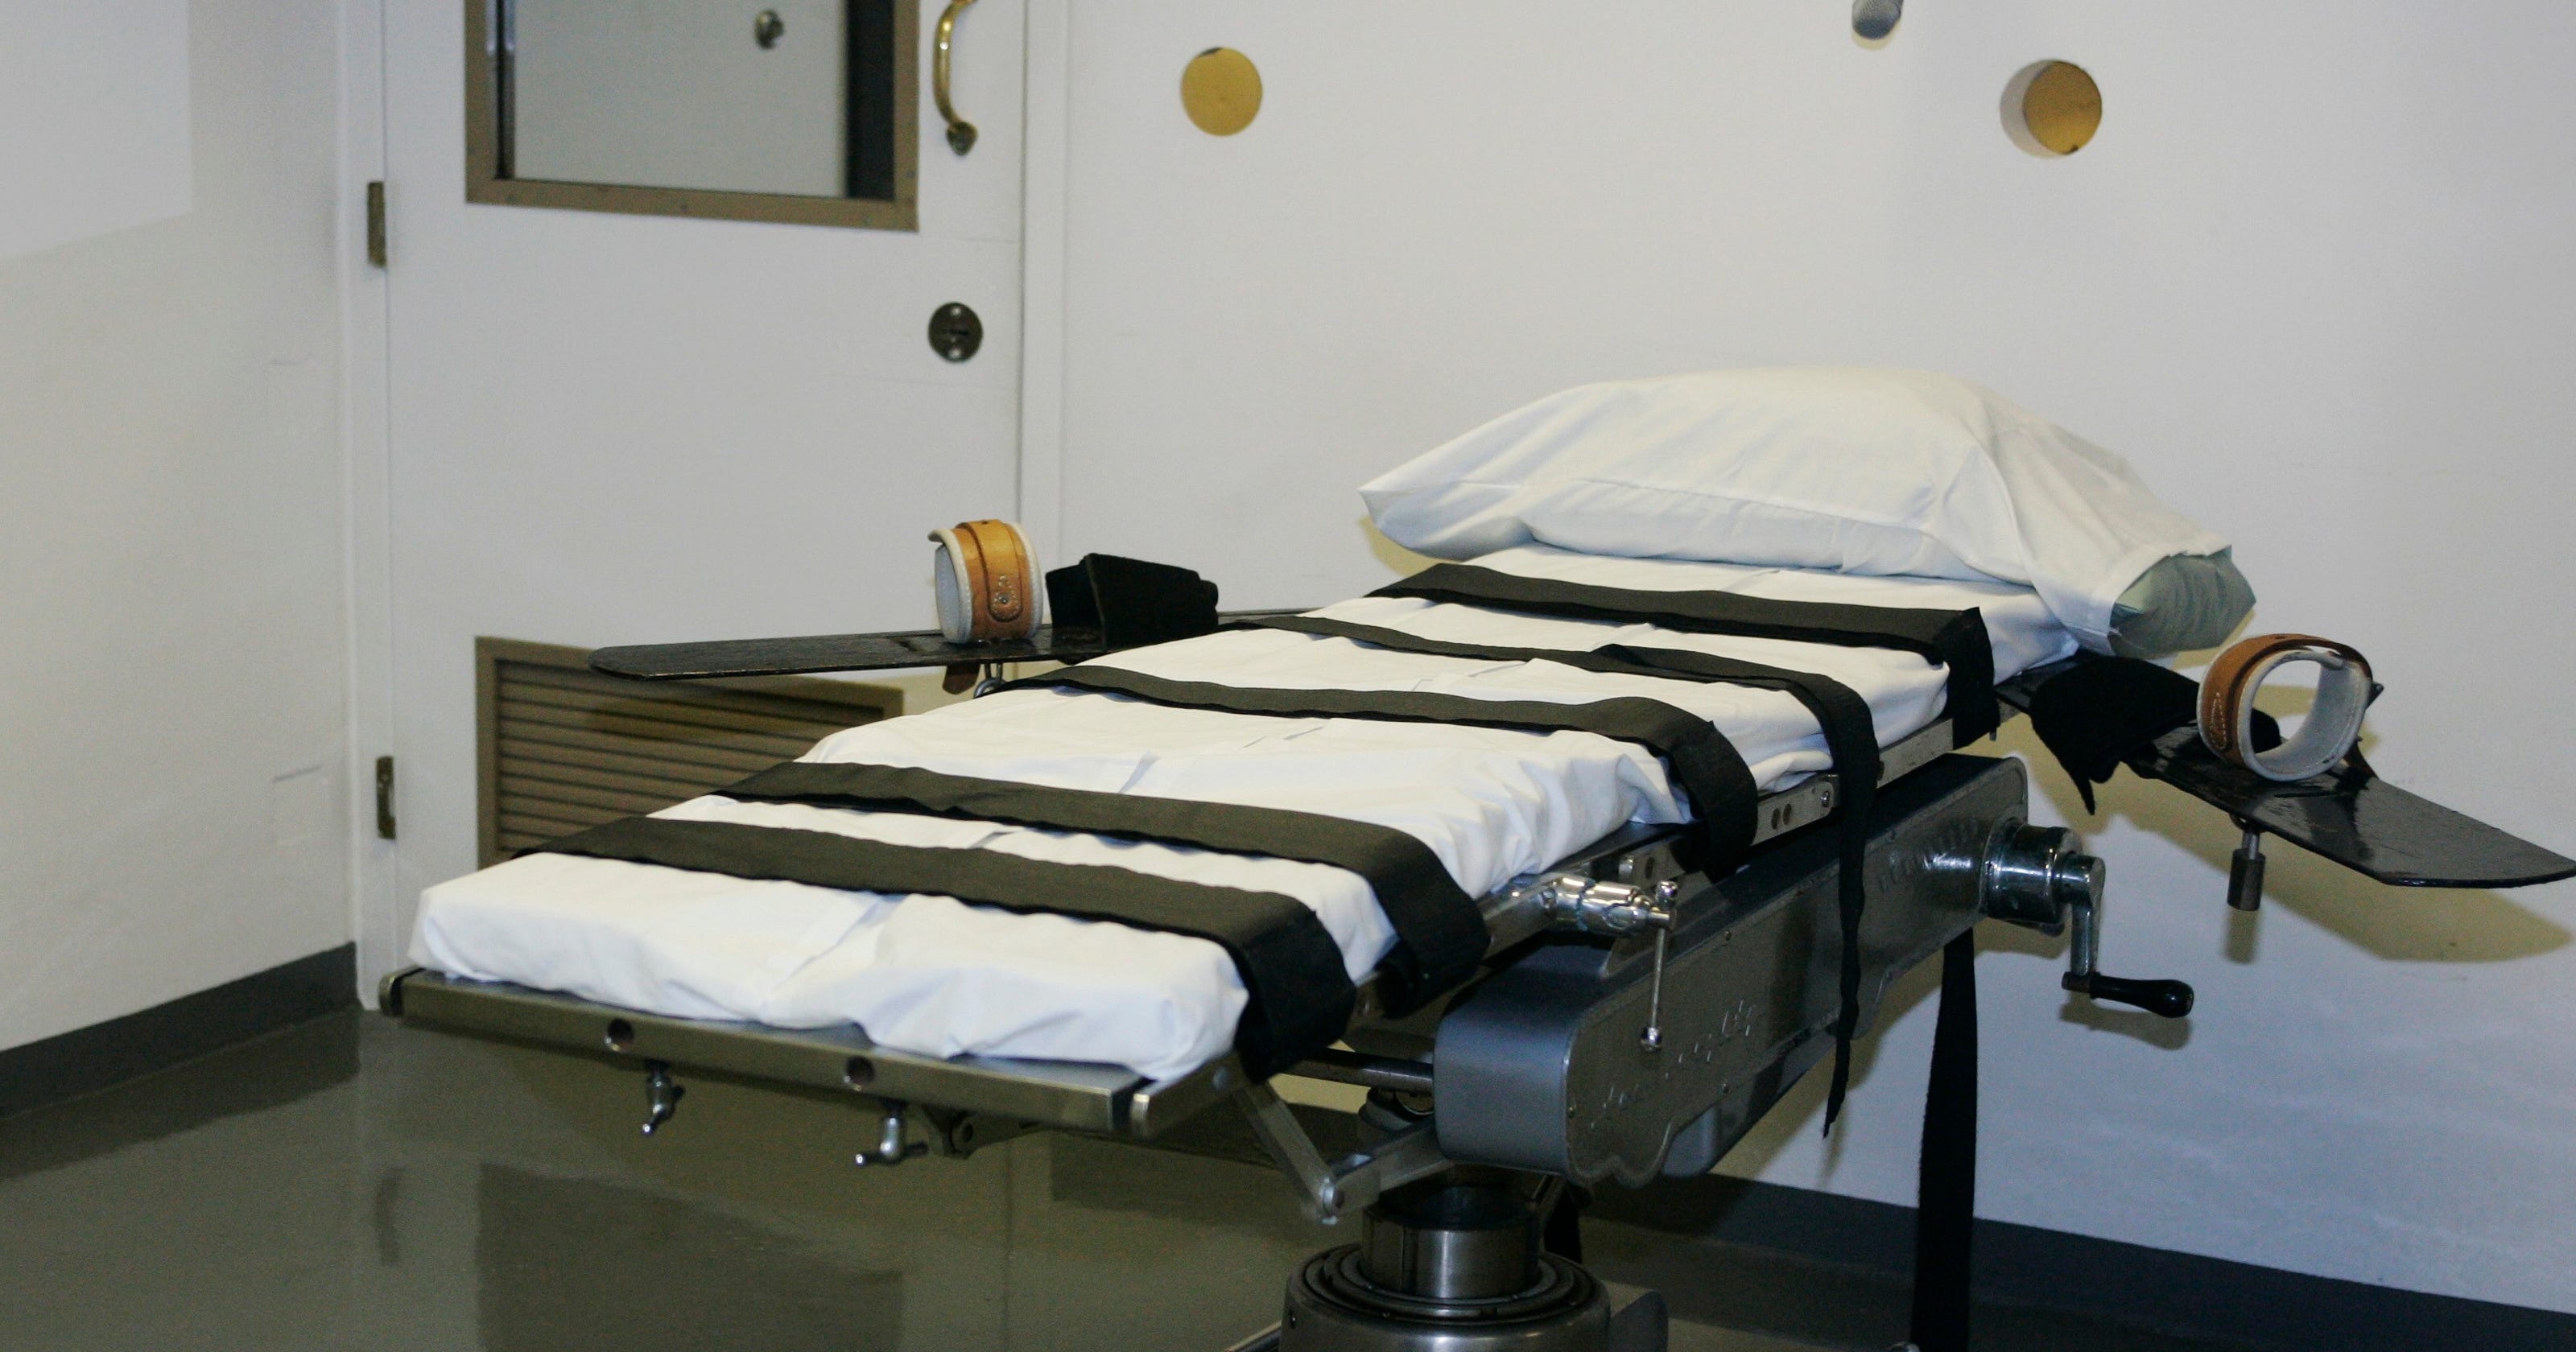 Oklahoma unveils new execution procedures